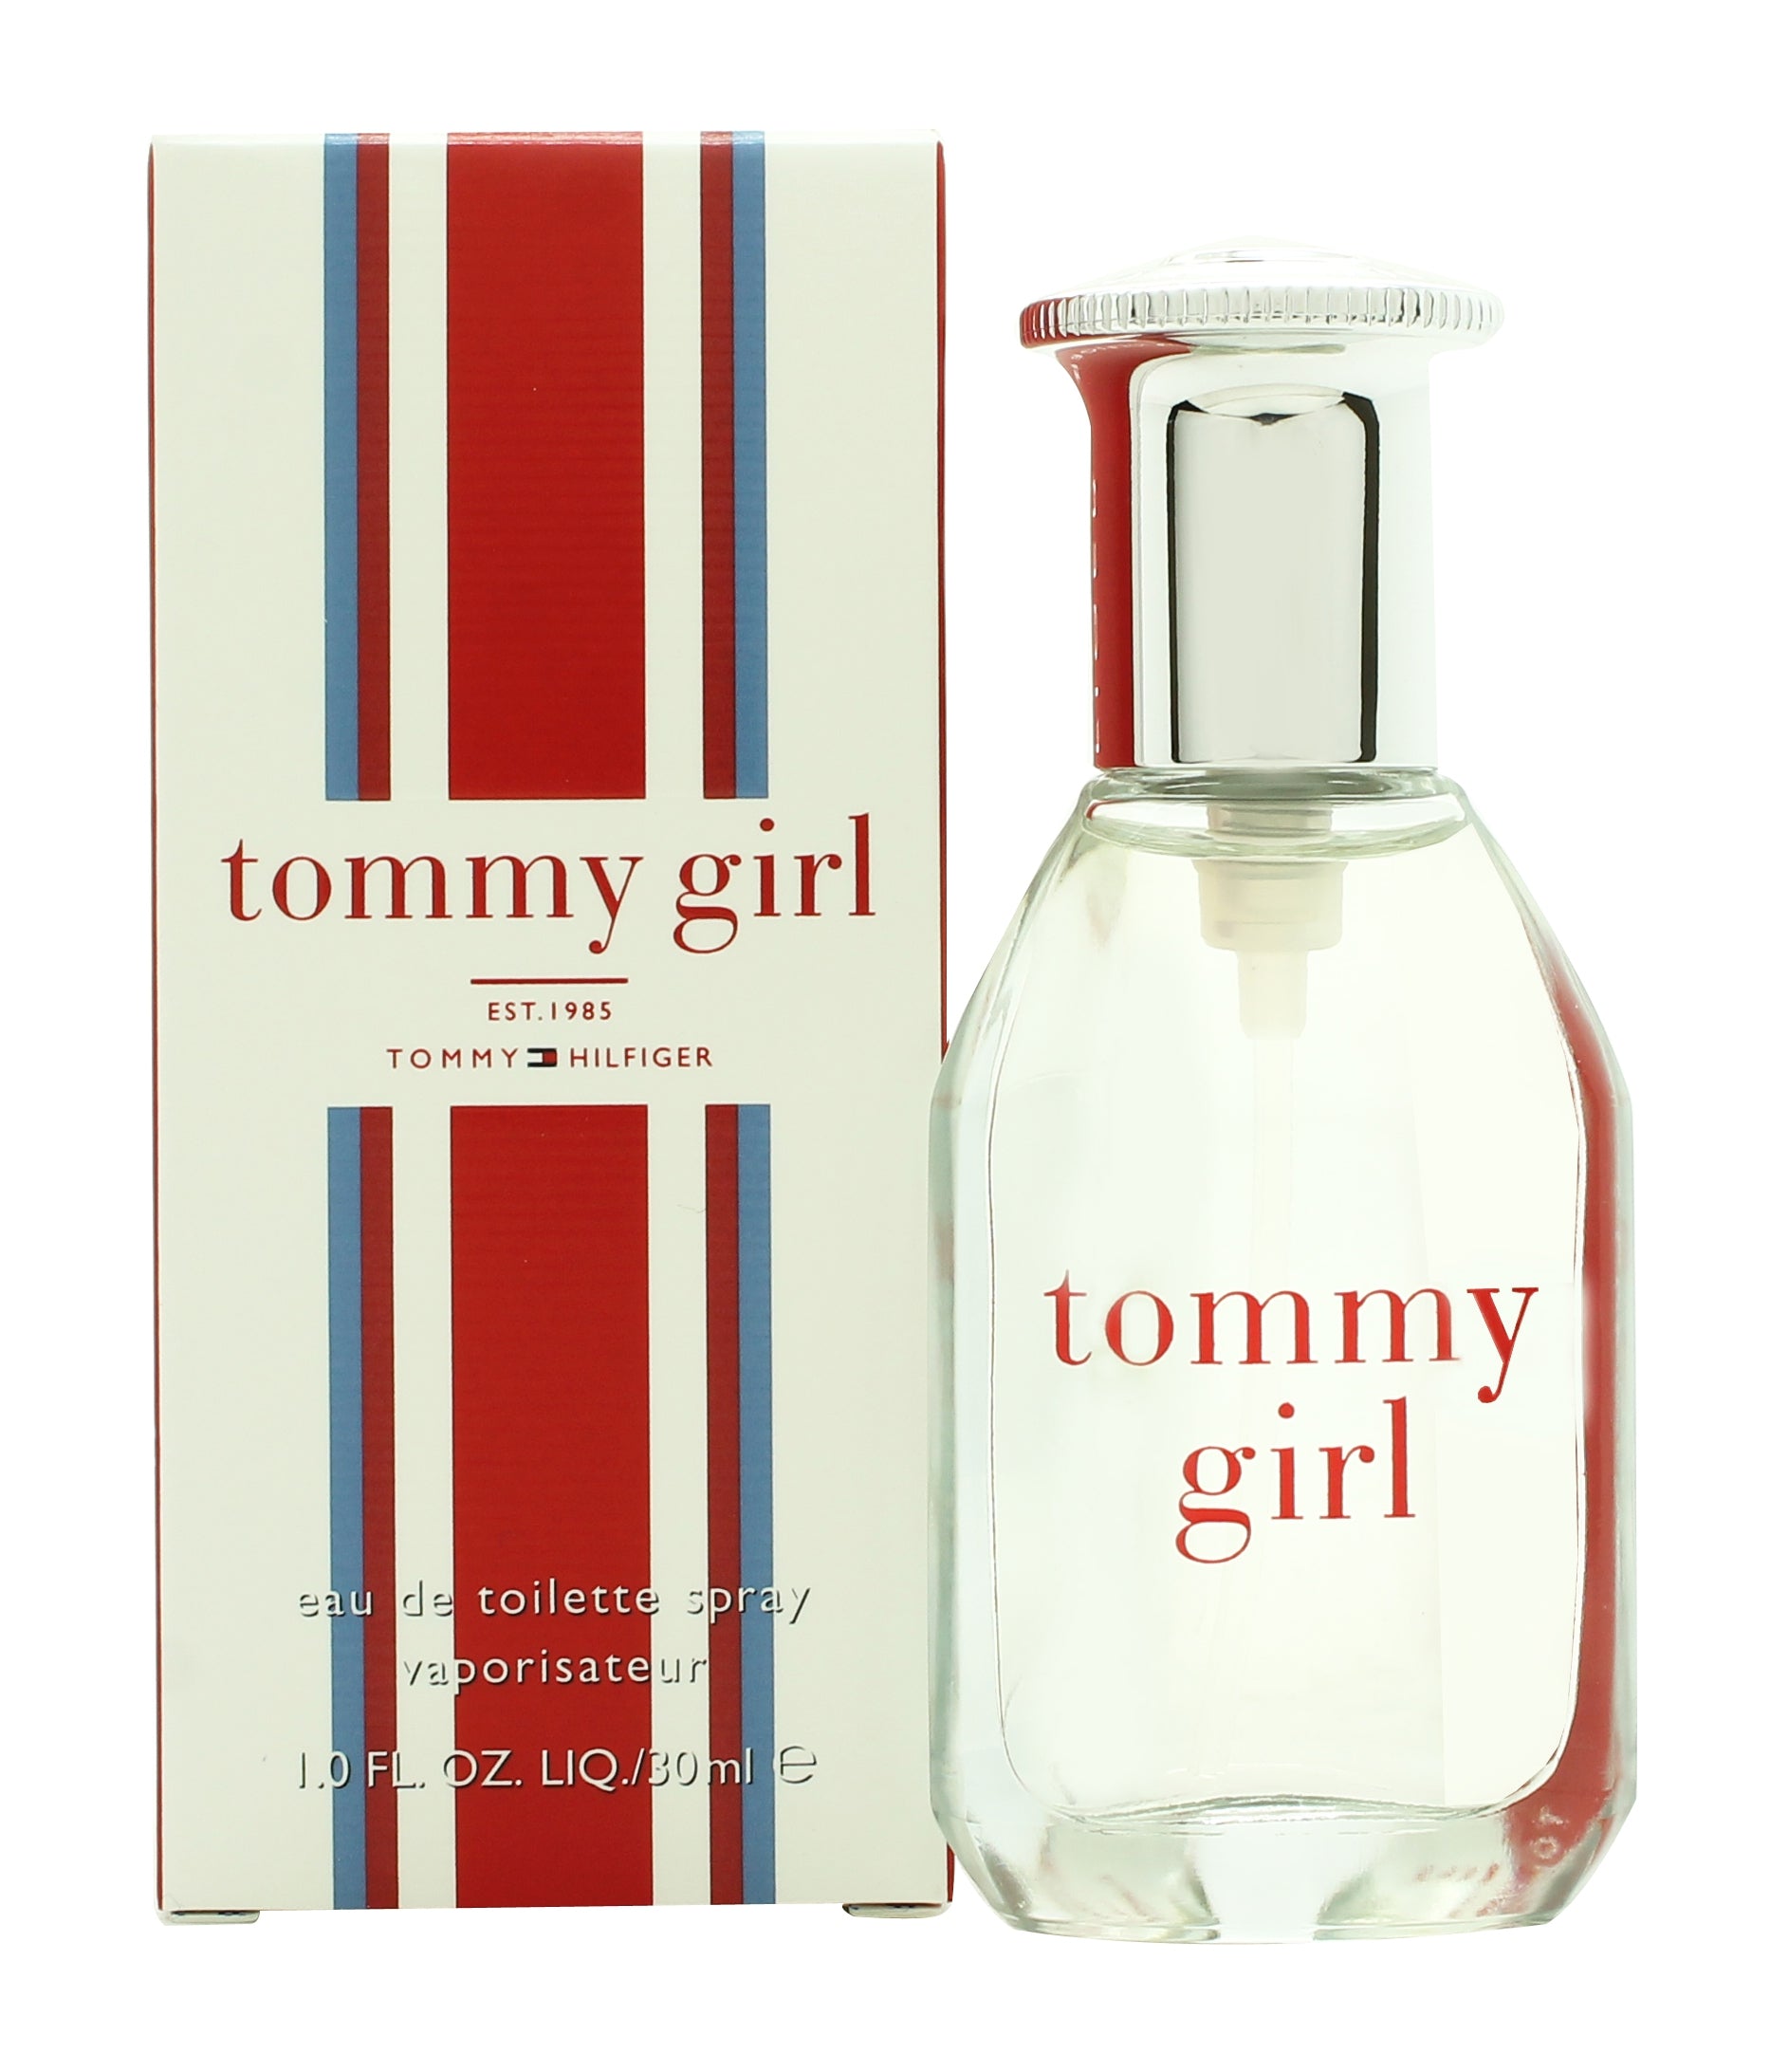 View Tommy Hilfiger Tommy Girl Eau de Toilette 30ml Spray information